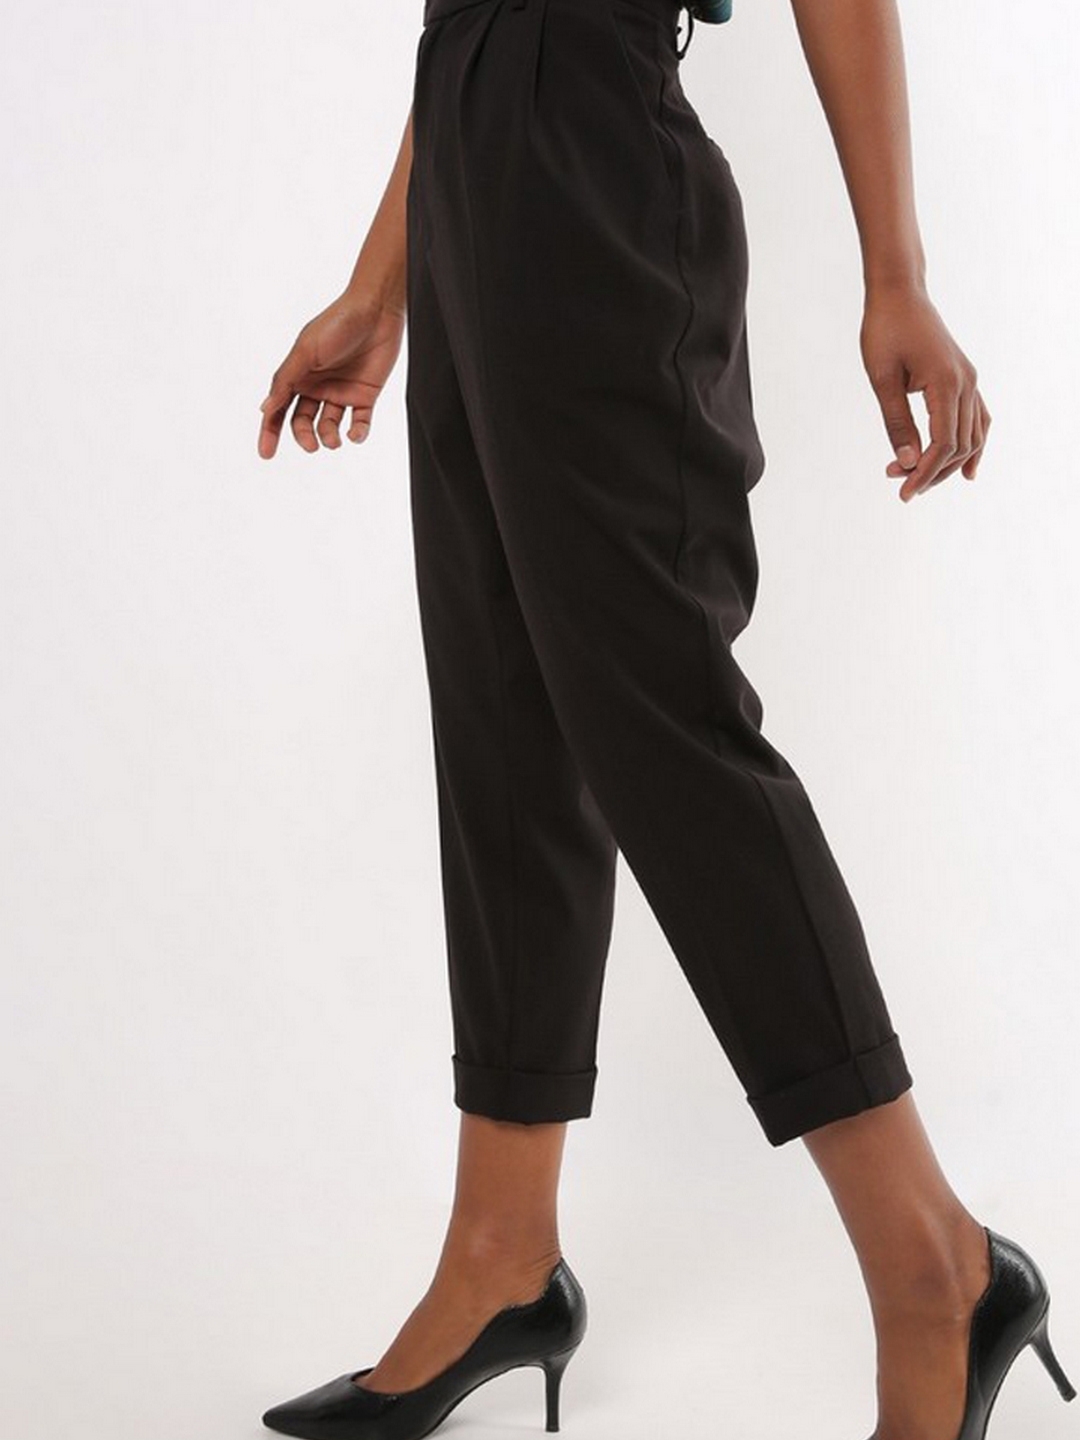 Best Ways To Wear Cropped Pants For Women 2022 | Black wide leg crop pants  outfit, Pants for women, Wide leg crop pants outfit